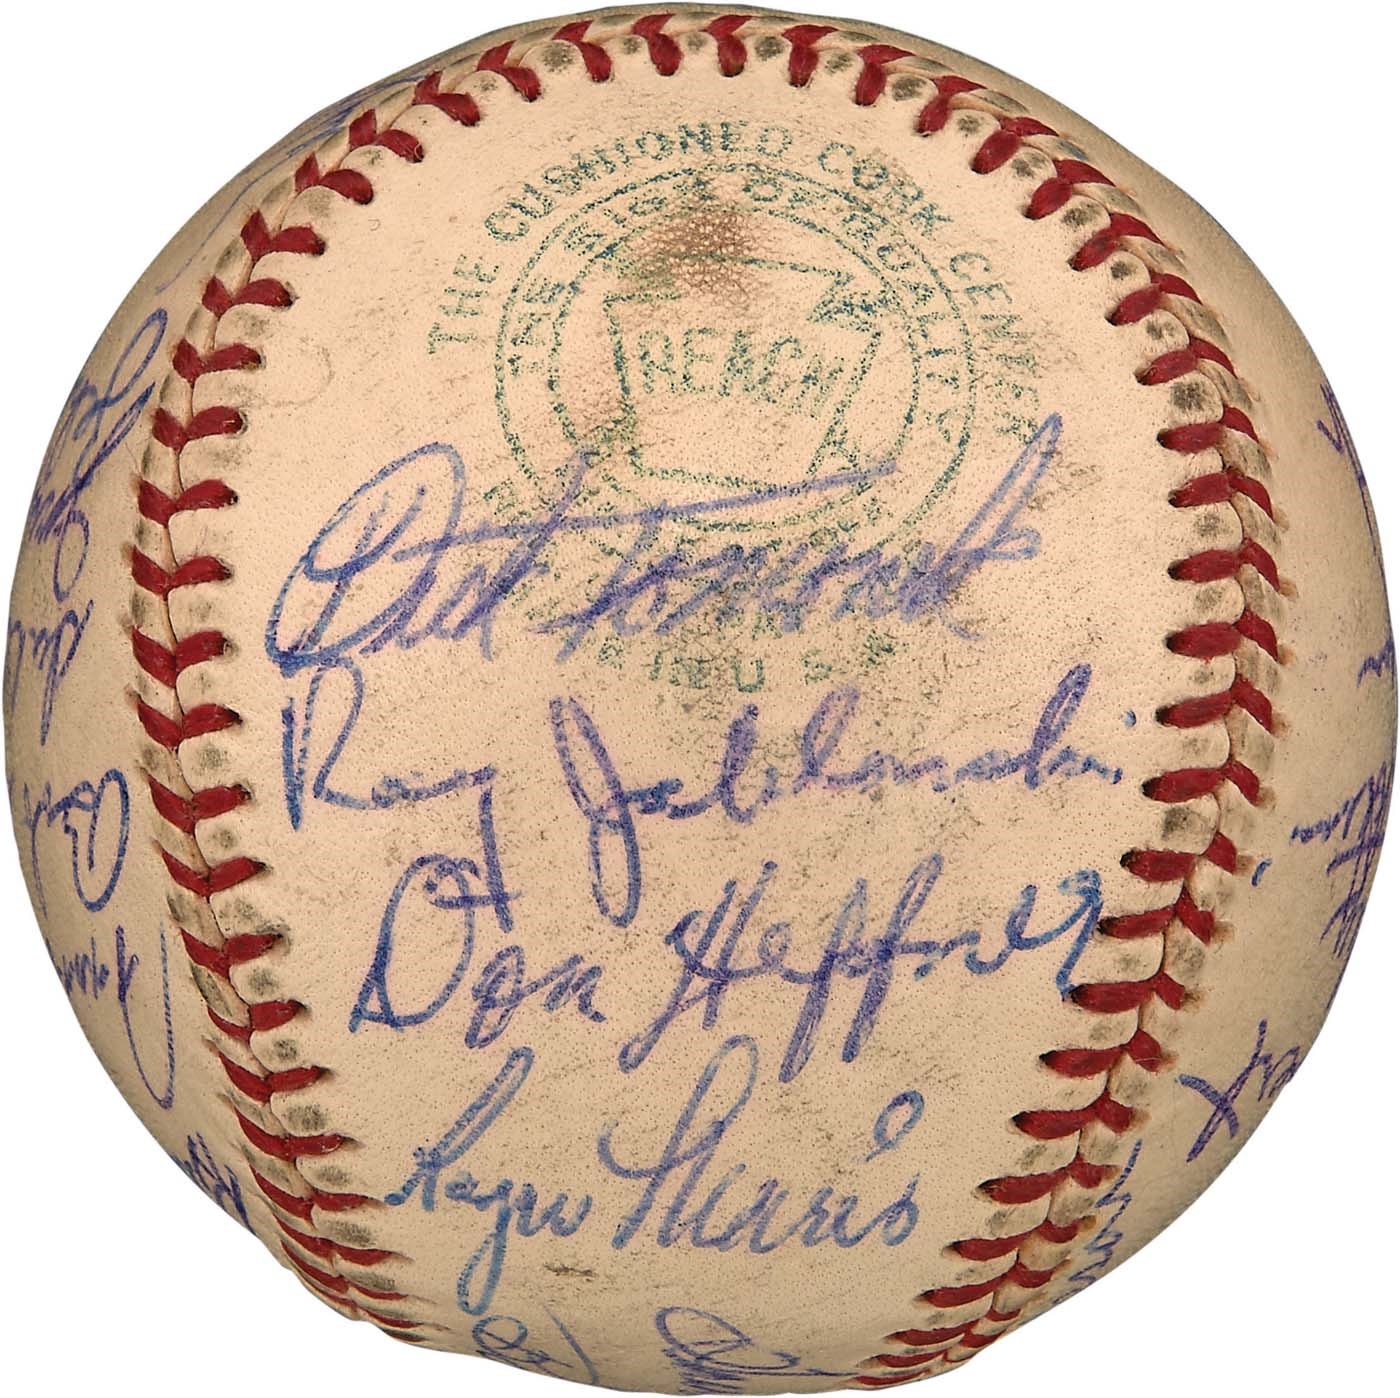 Baseball Autographs - 1959 Kansas City Athletics Team-Signed Baseball with Roger Maris - No Clubhouse (PSA)